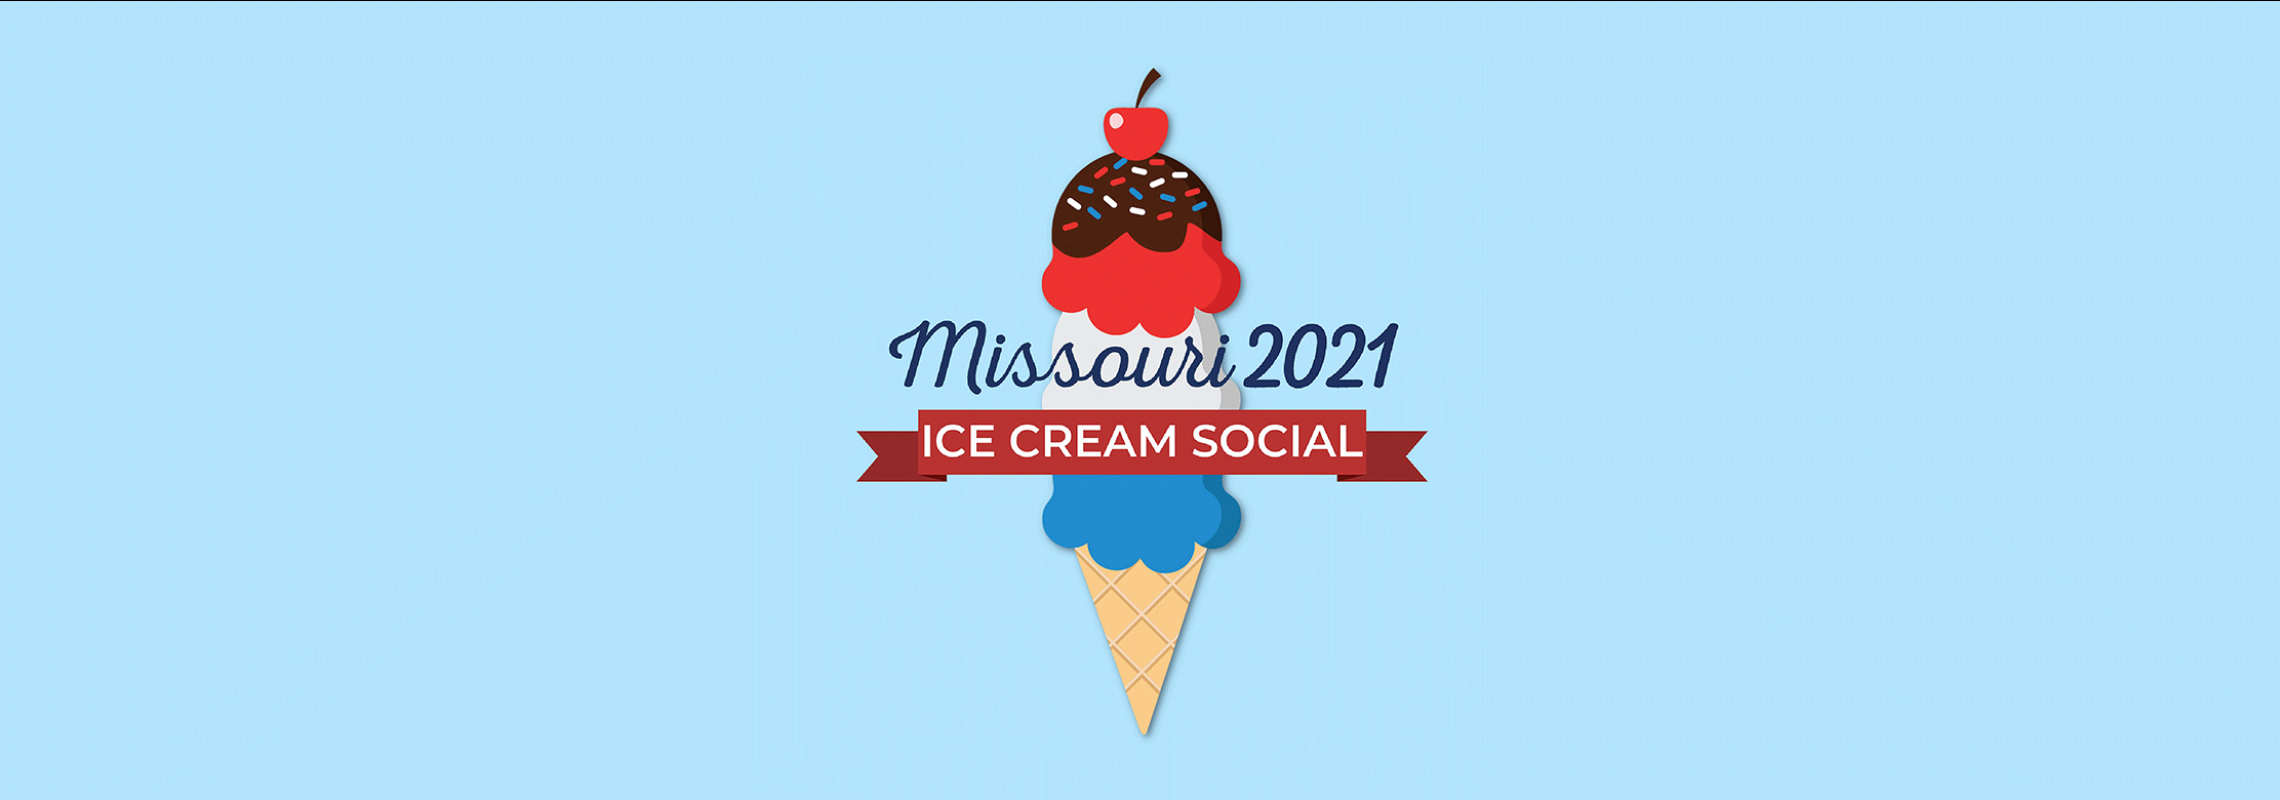 Missouri 2021 Ice Cream Social